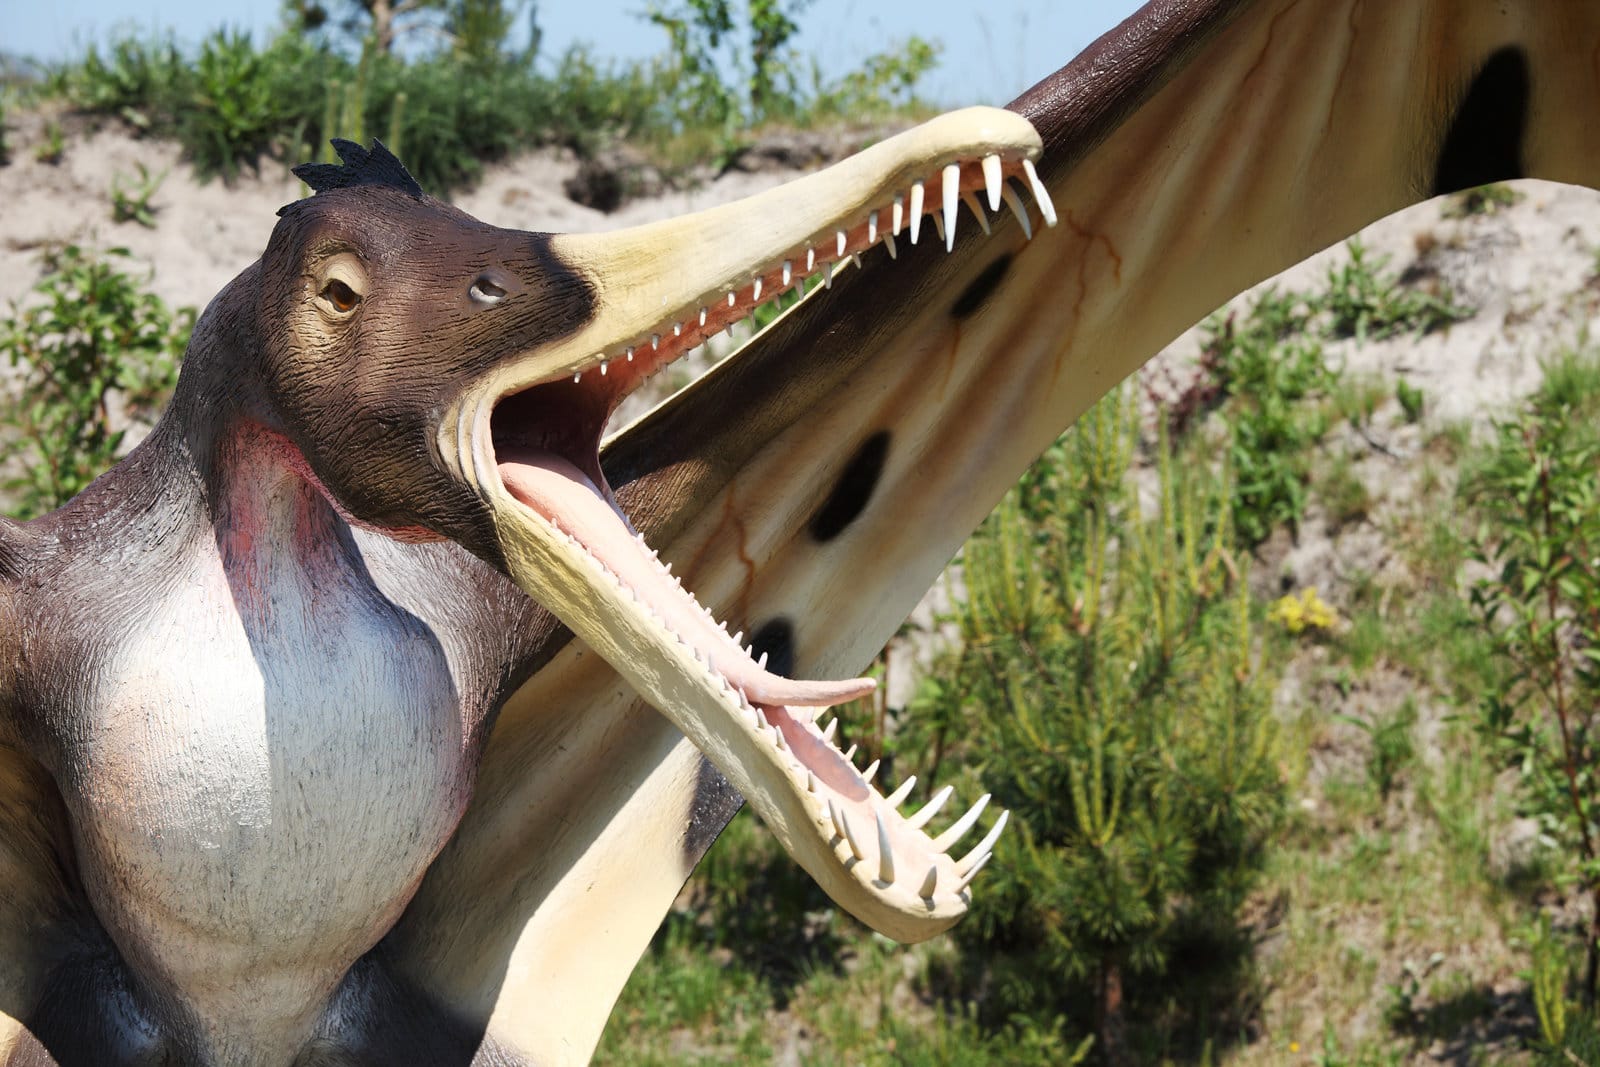 Creative Dinosaur Puns That Will Make You Roar